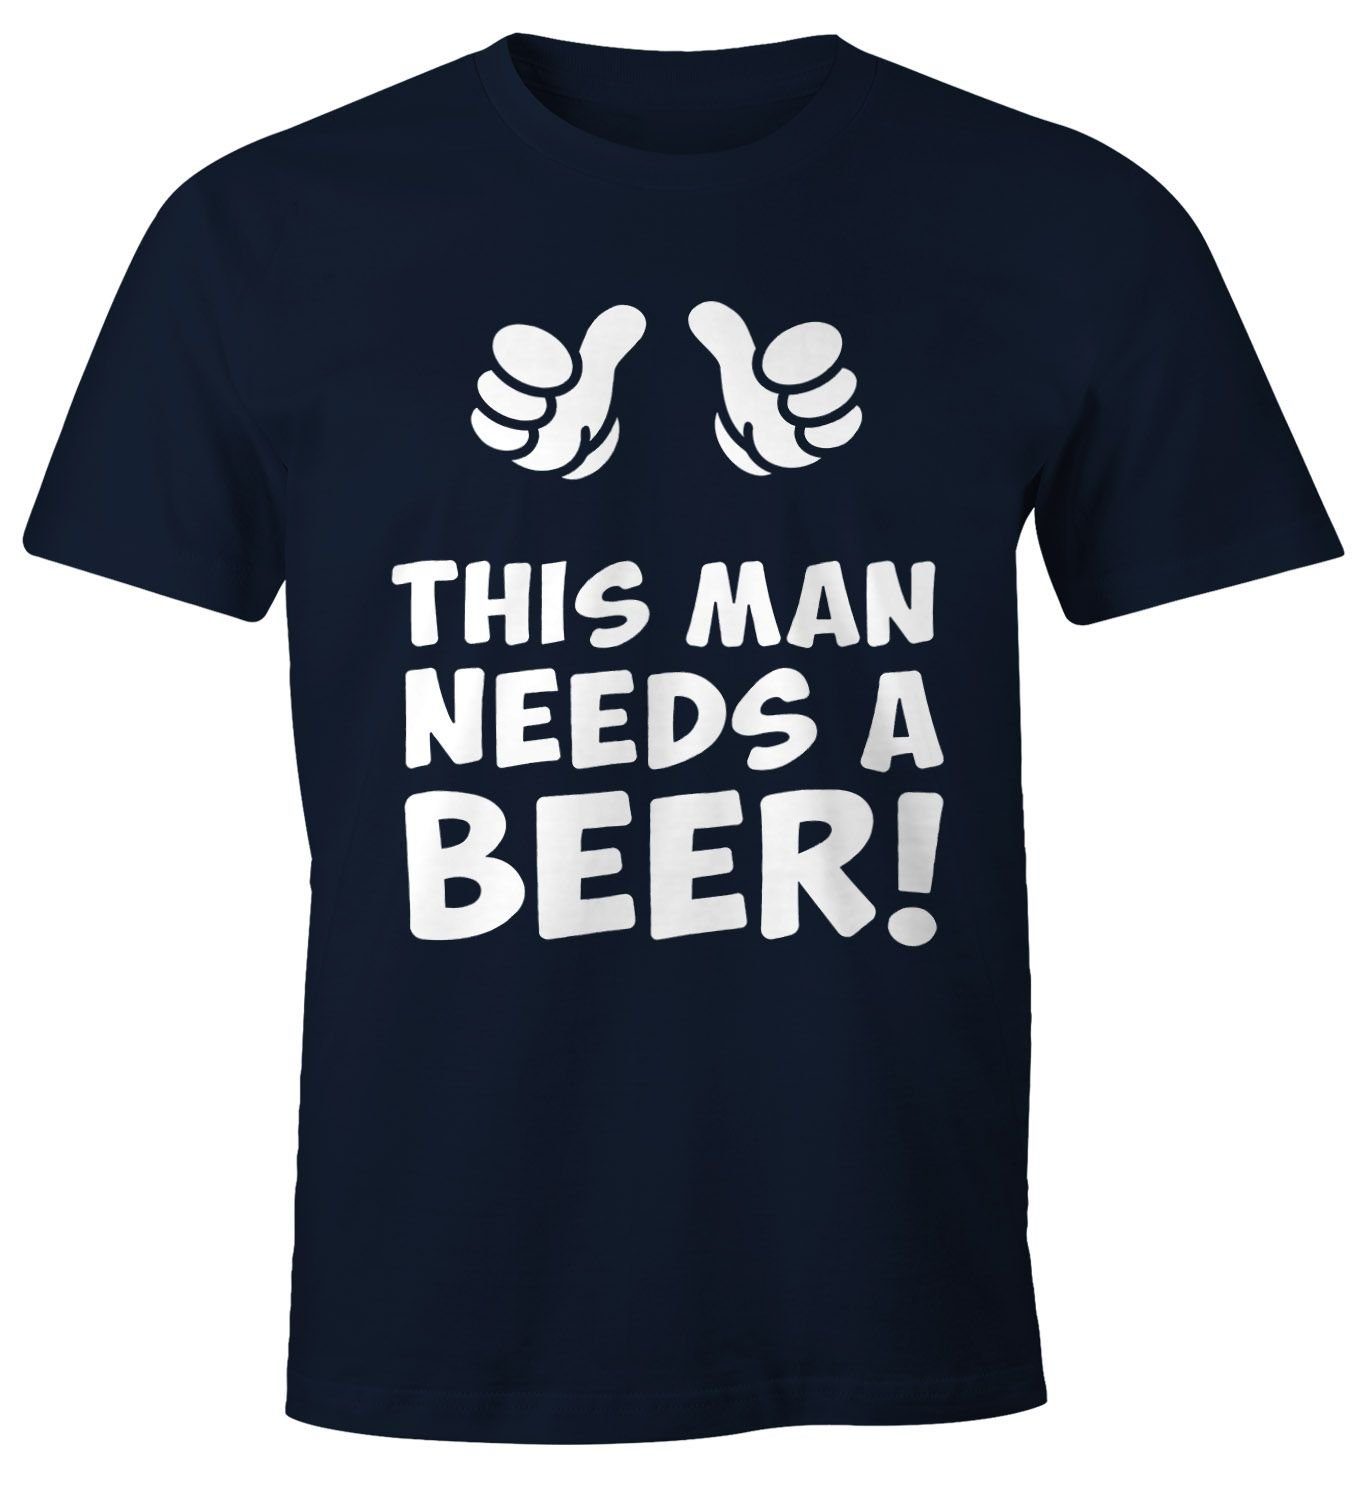 Print-Shirt Bier beer man This Moonworks® Print T-Shirt mit navy MoonWorks Herren a needs